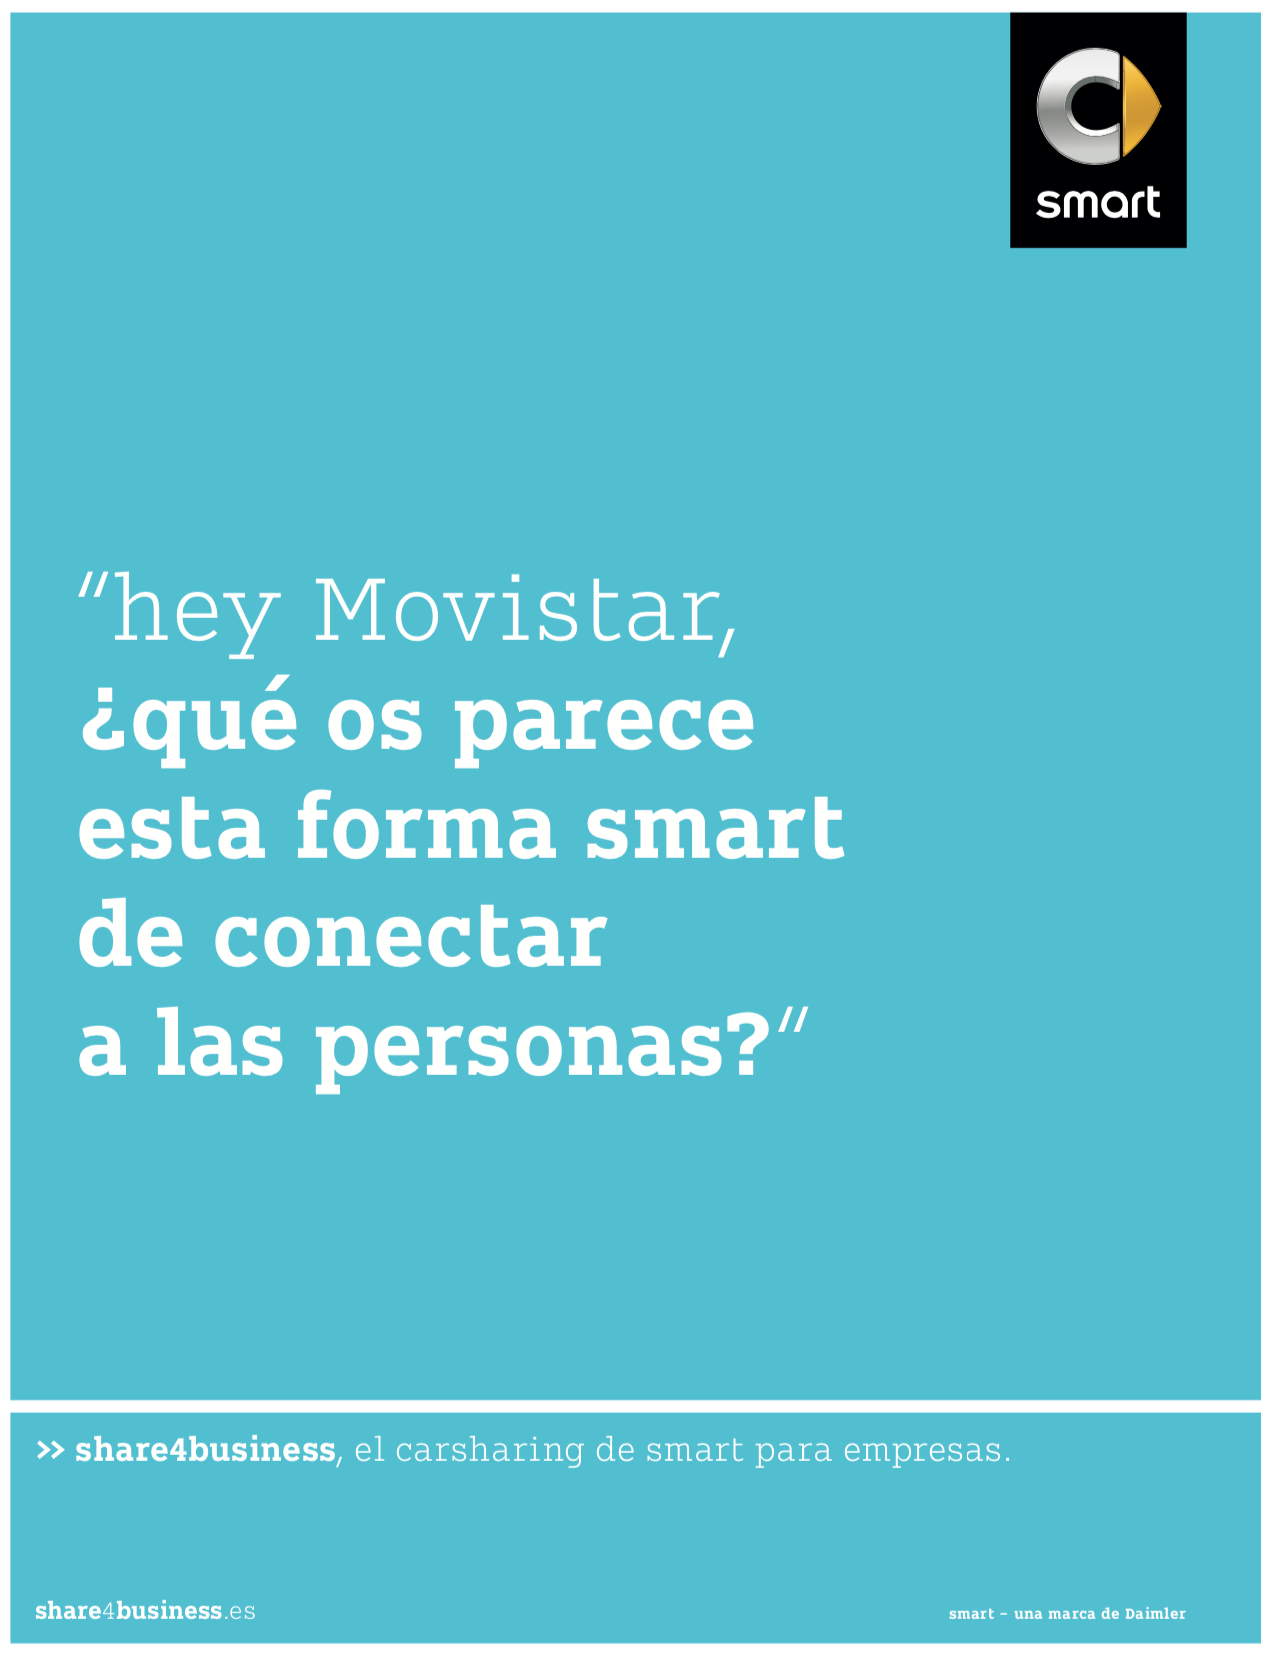 SMART Movistar mkn